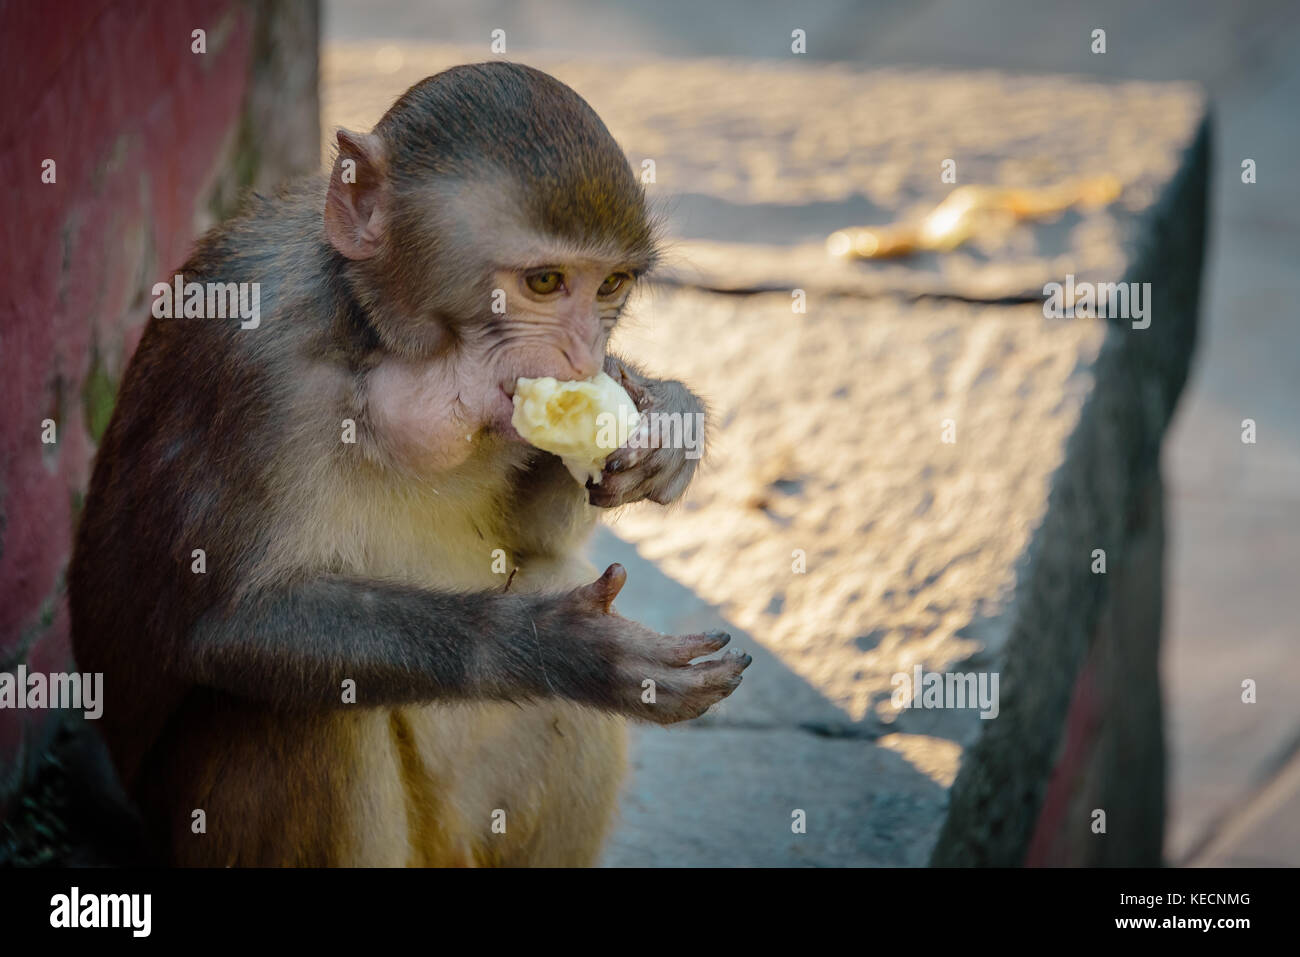 Monkey eating banana in temple, Kathmandu Stock Photo